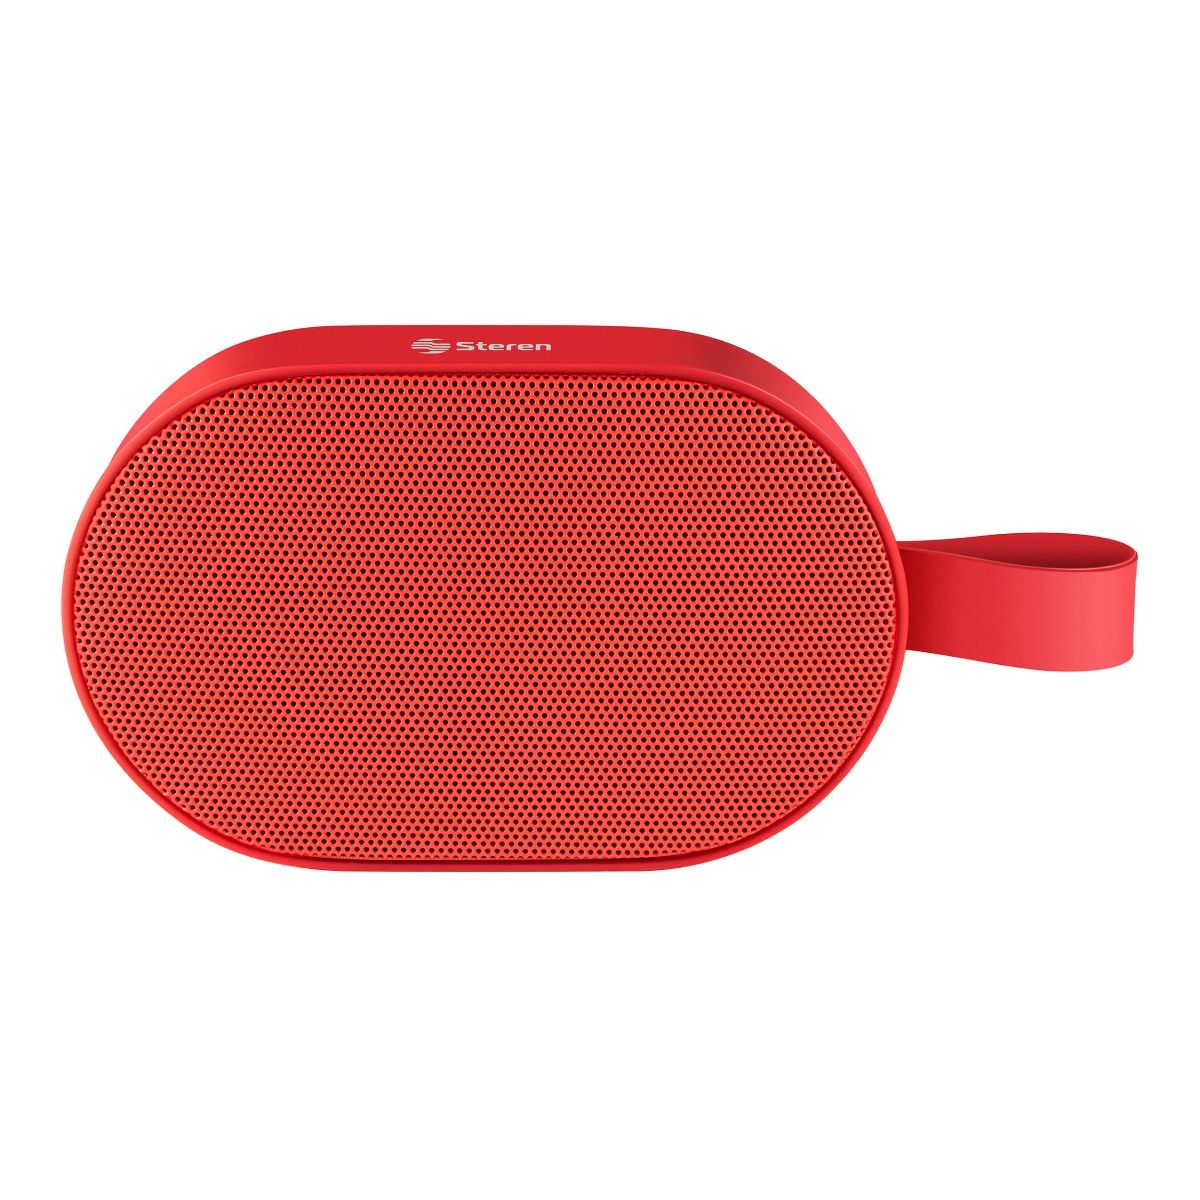 Bocina Bluetooth* mini SoundBar con acabado textil rojo